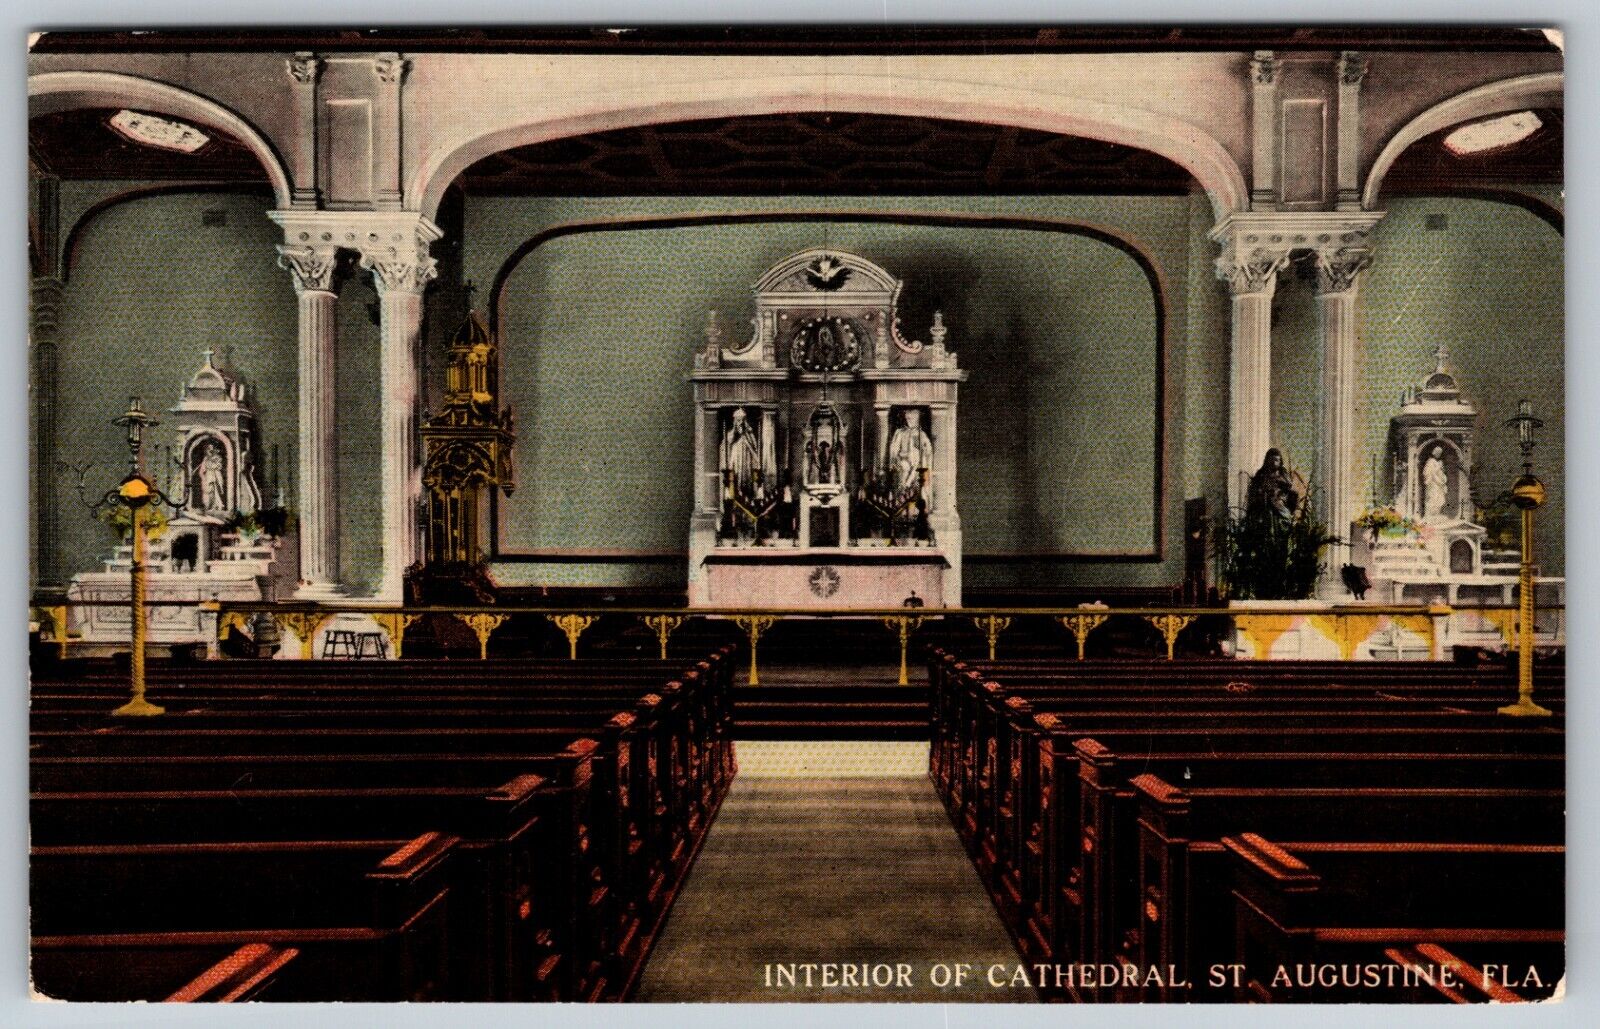 ST. AUGUSTINE FLORIDA FL INTERIOR OF CATHEDRAL CHURCH VINTAGE POSTCARD